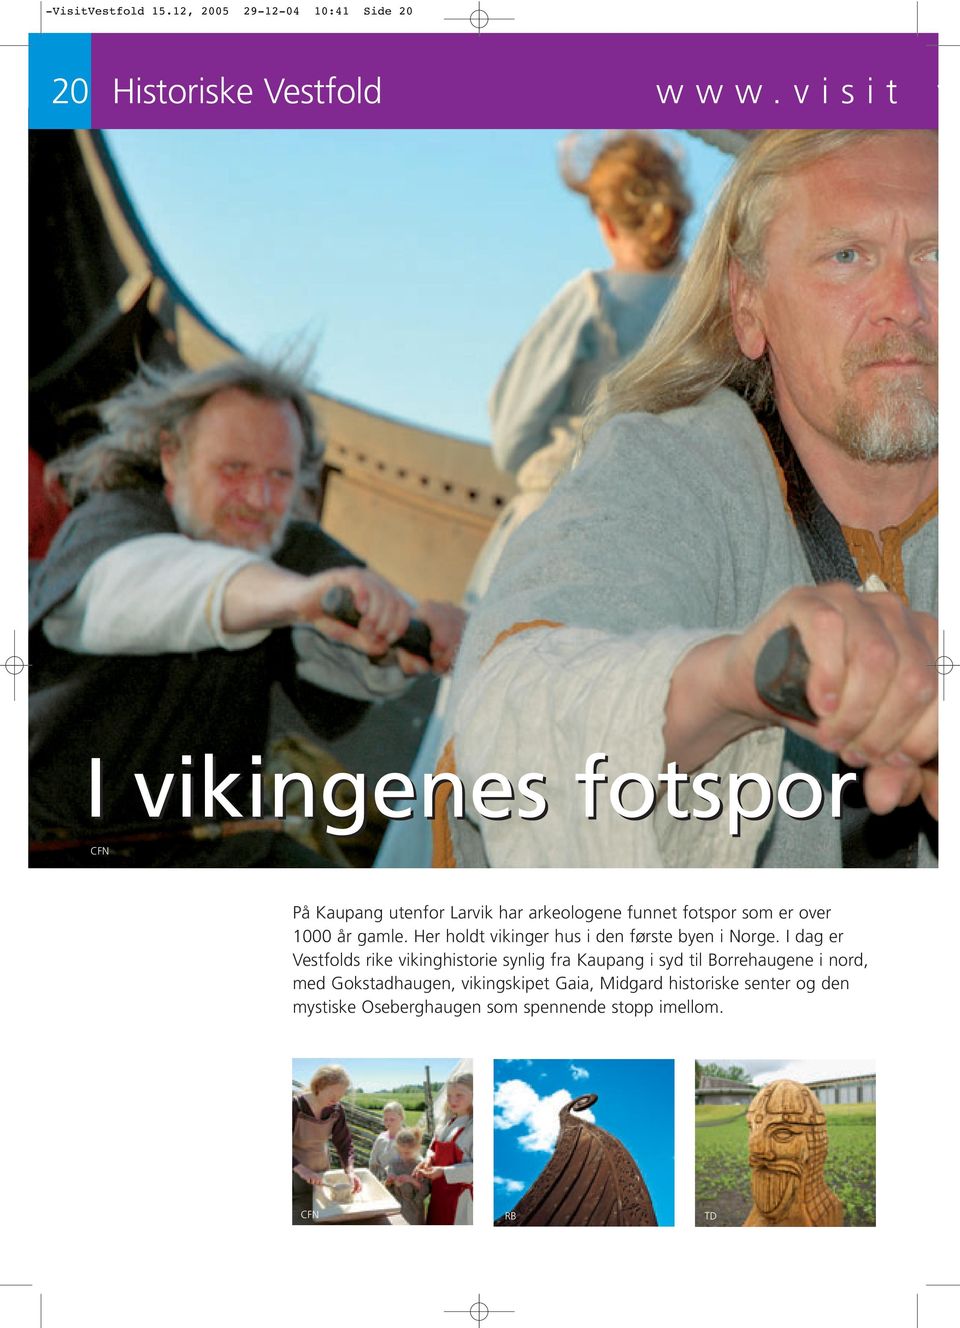 Her holdt vikinger hus i den første byen i Norge.